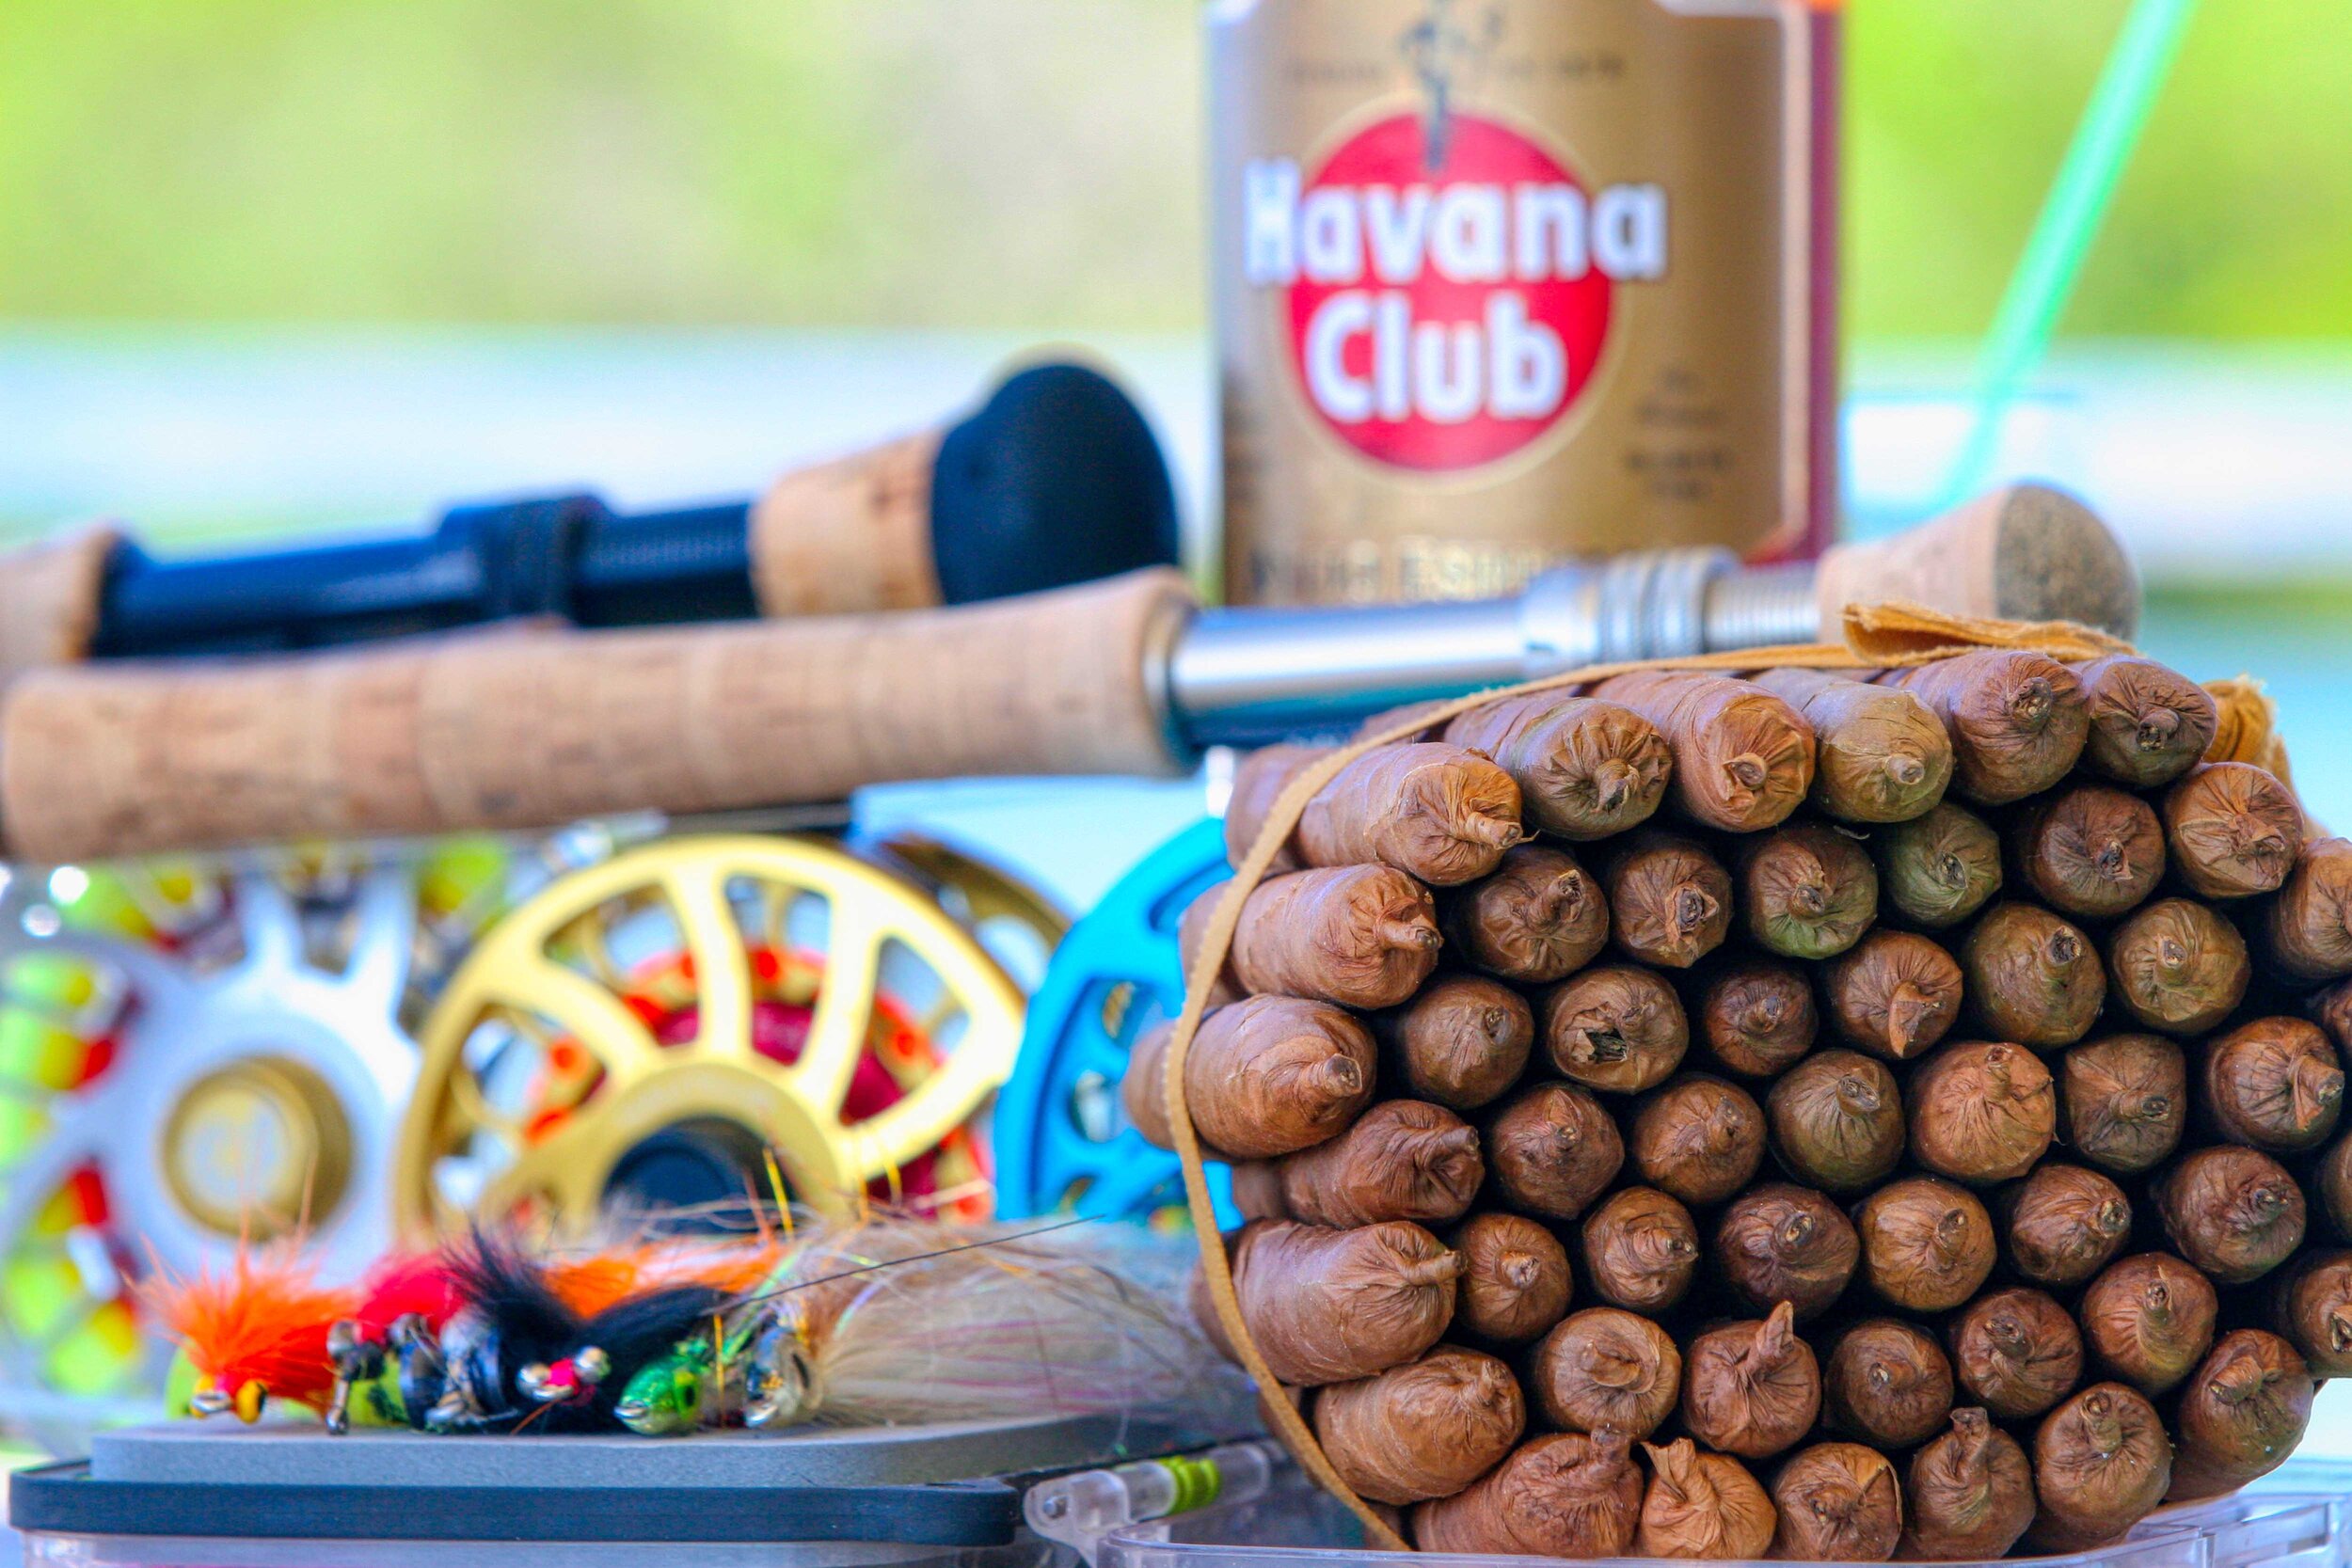 Cuba cigars and reels 2 300. SIZED.jpg